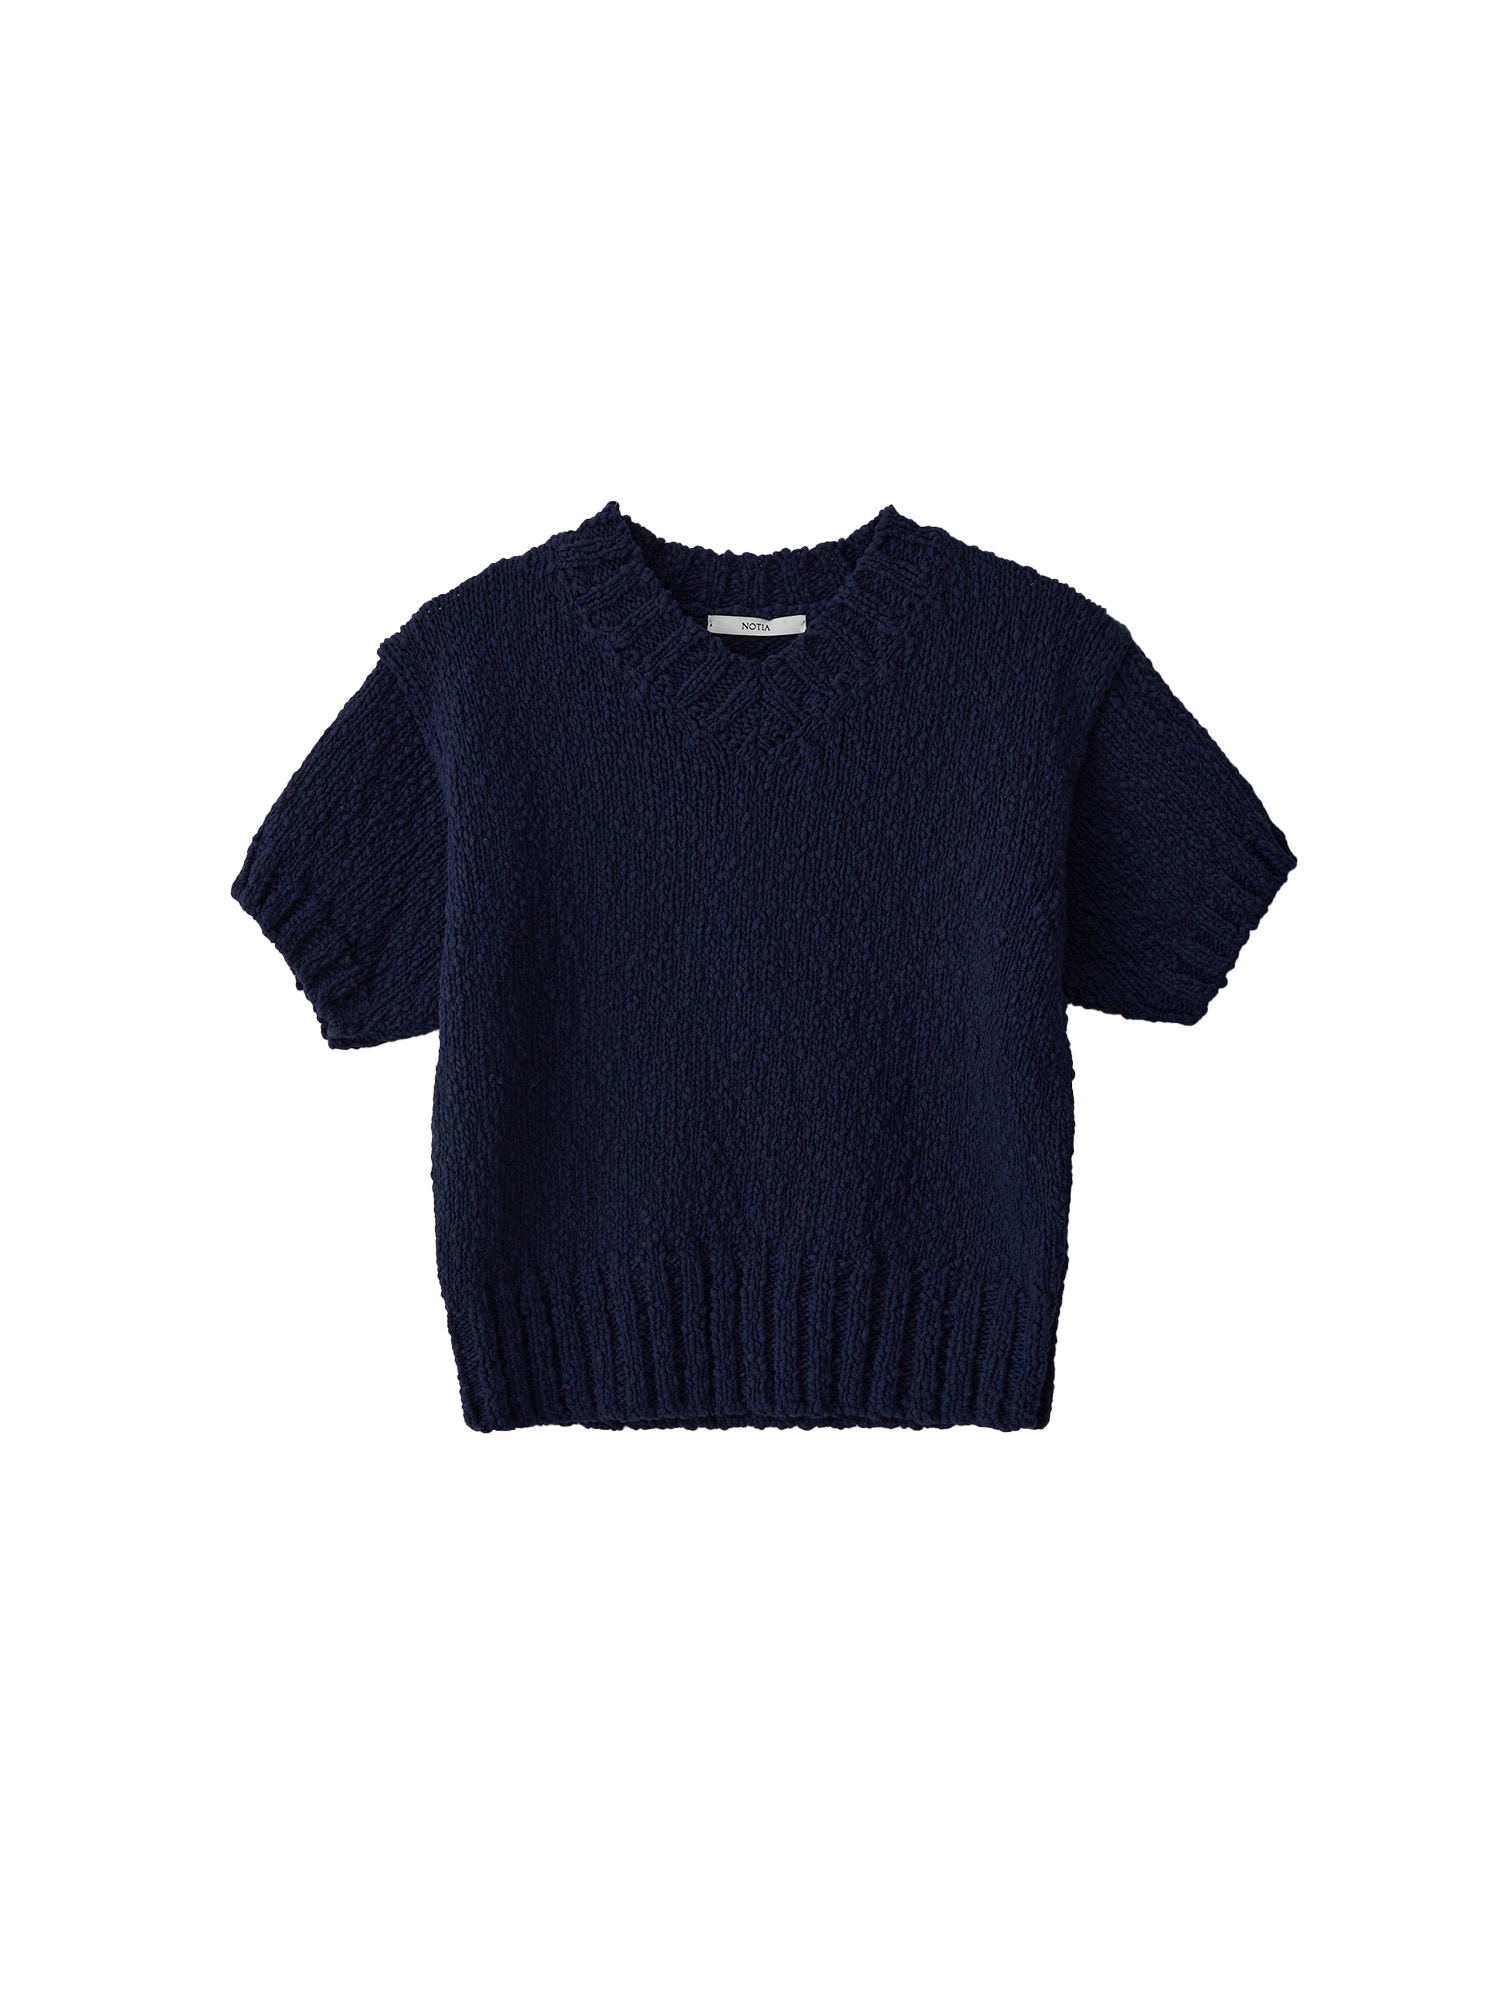 Organic Cotton V Neck Knit Top - Navy